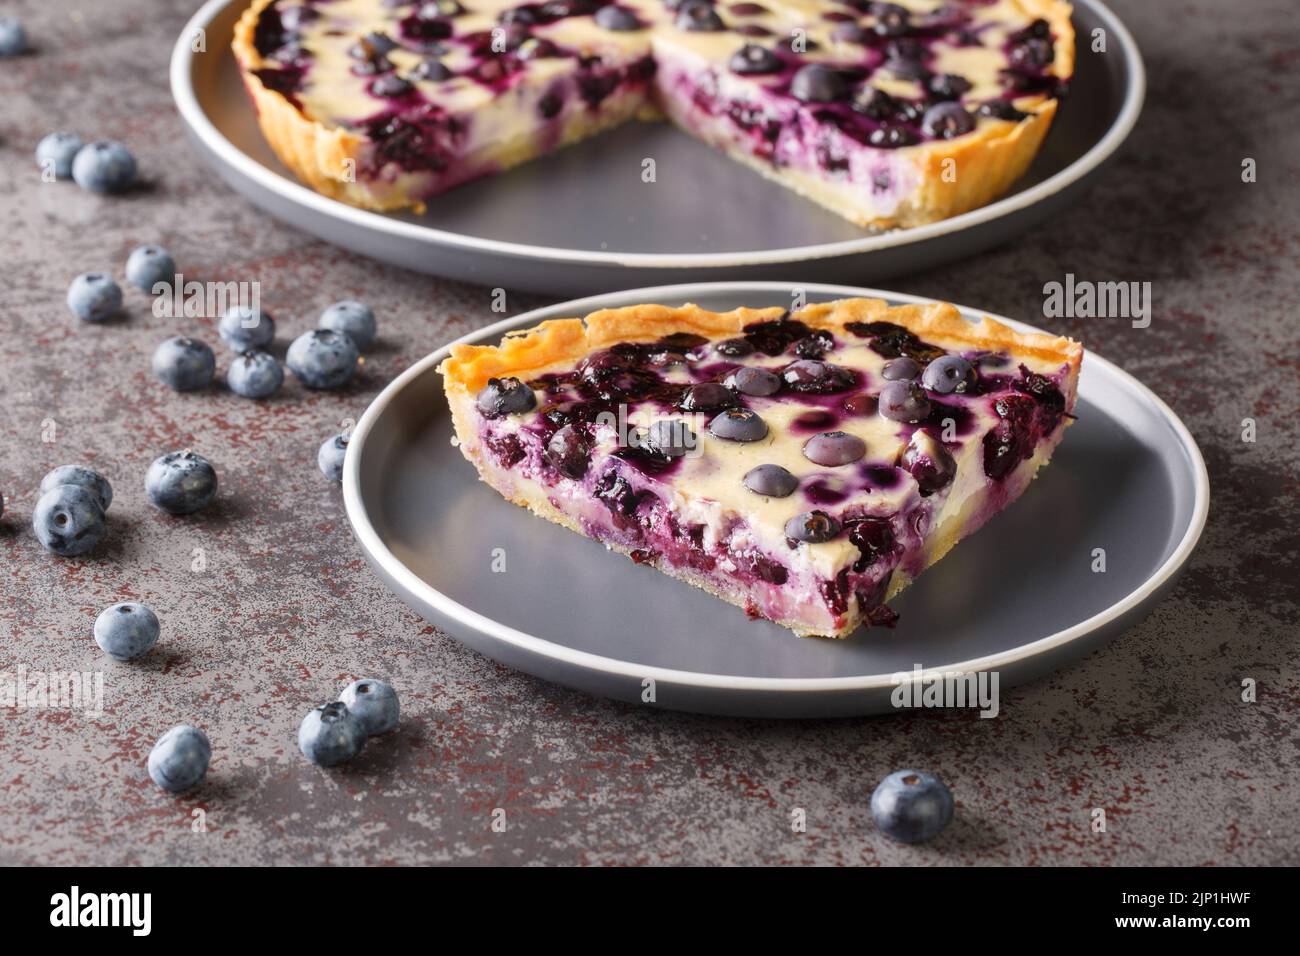 Mustikkapiirakka a Finnish Blueberry Pie Tart sliced close-up in a plate on a table. Horizontal Stock Photo